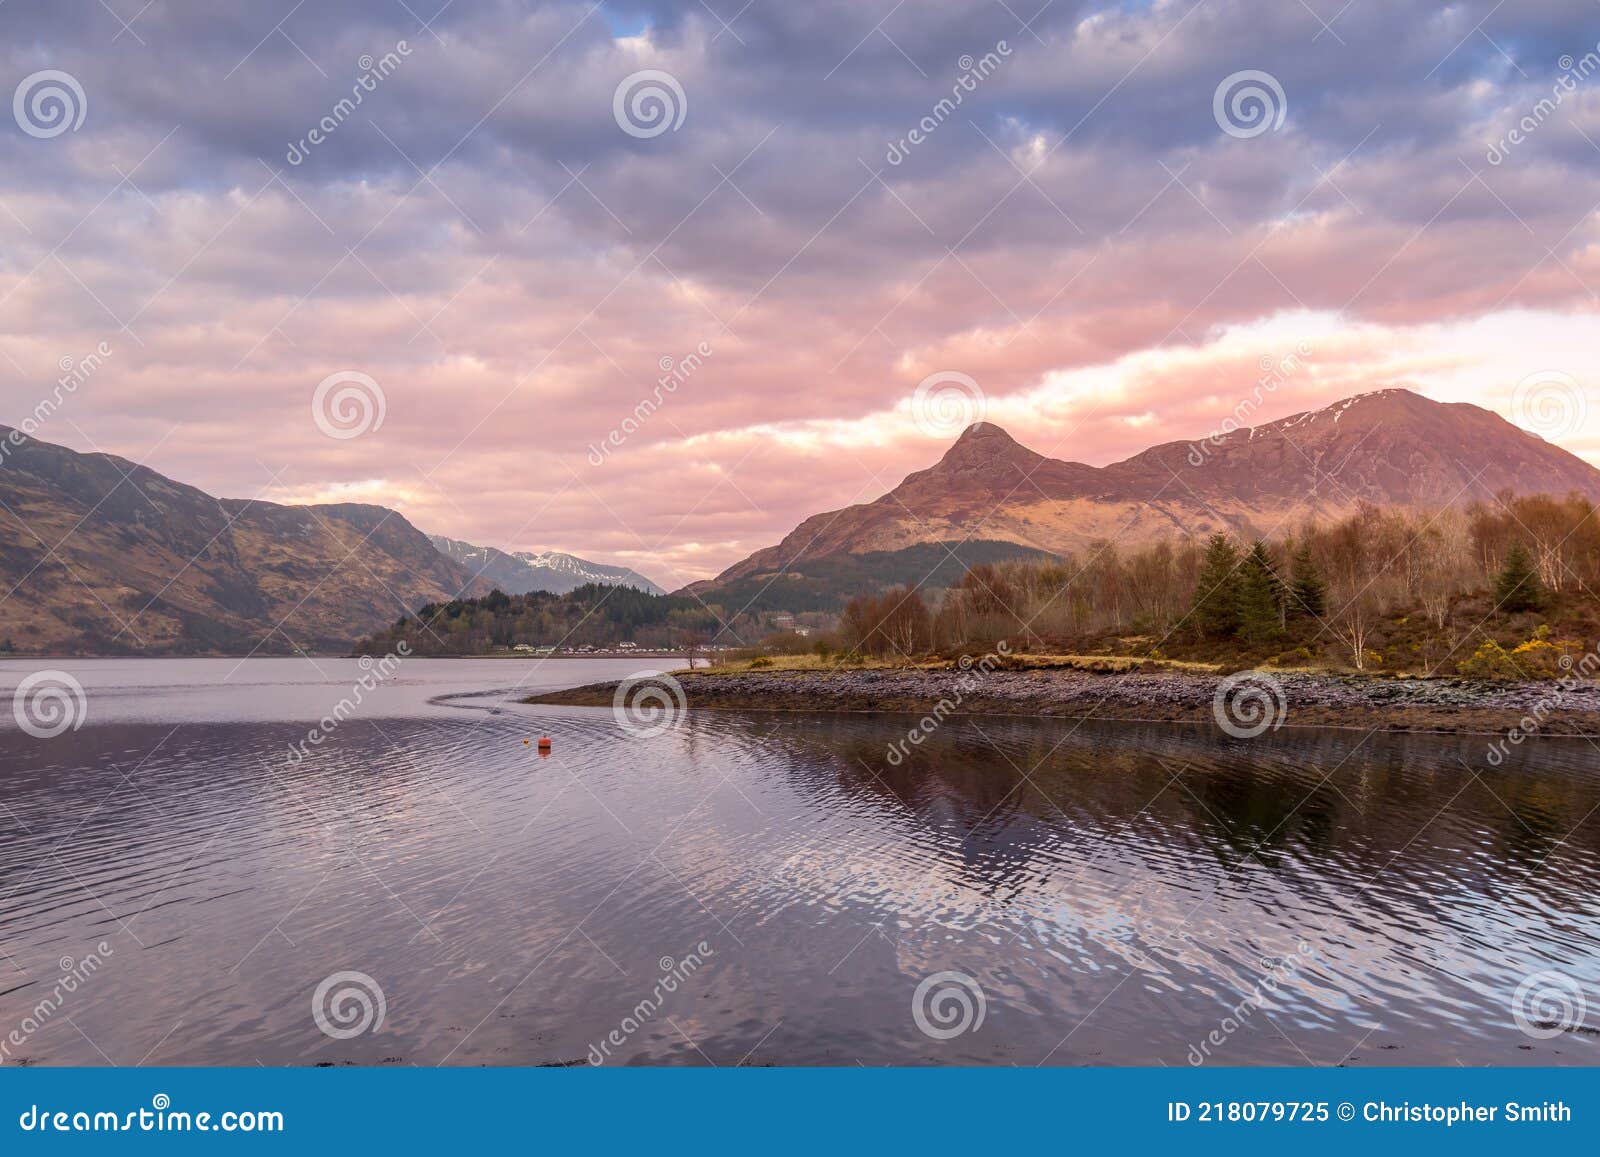 Loch leven Scotland stock image. Image of tourist, panoramic - 218079725